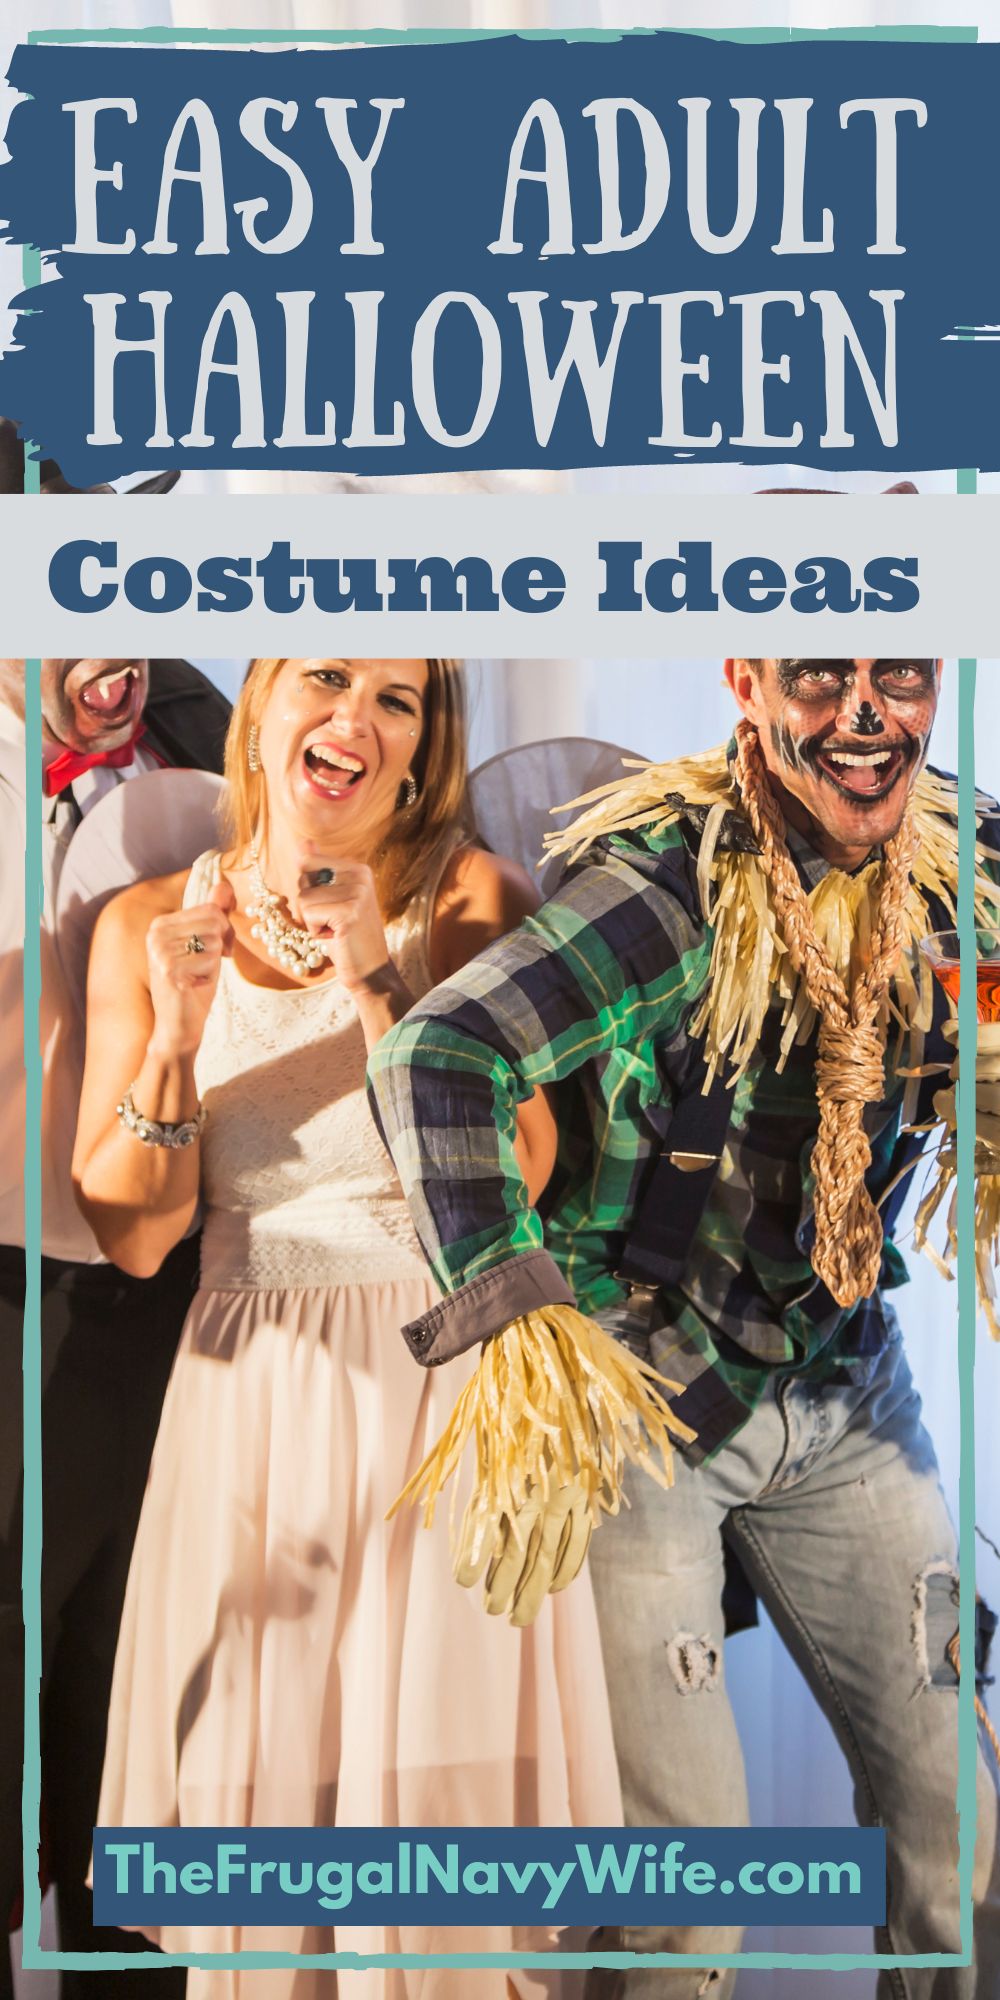 The Ultimate Group Costume Ideas Guide - Joke.co.uk